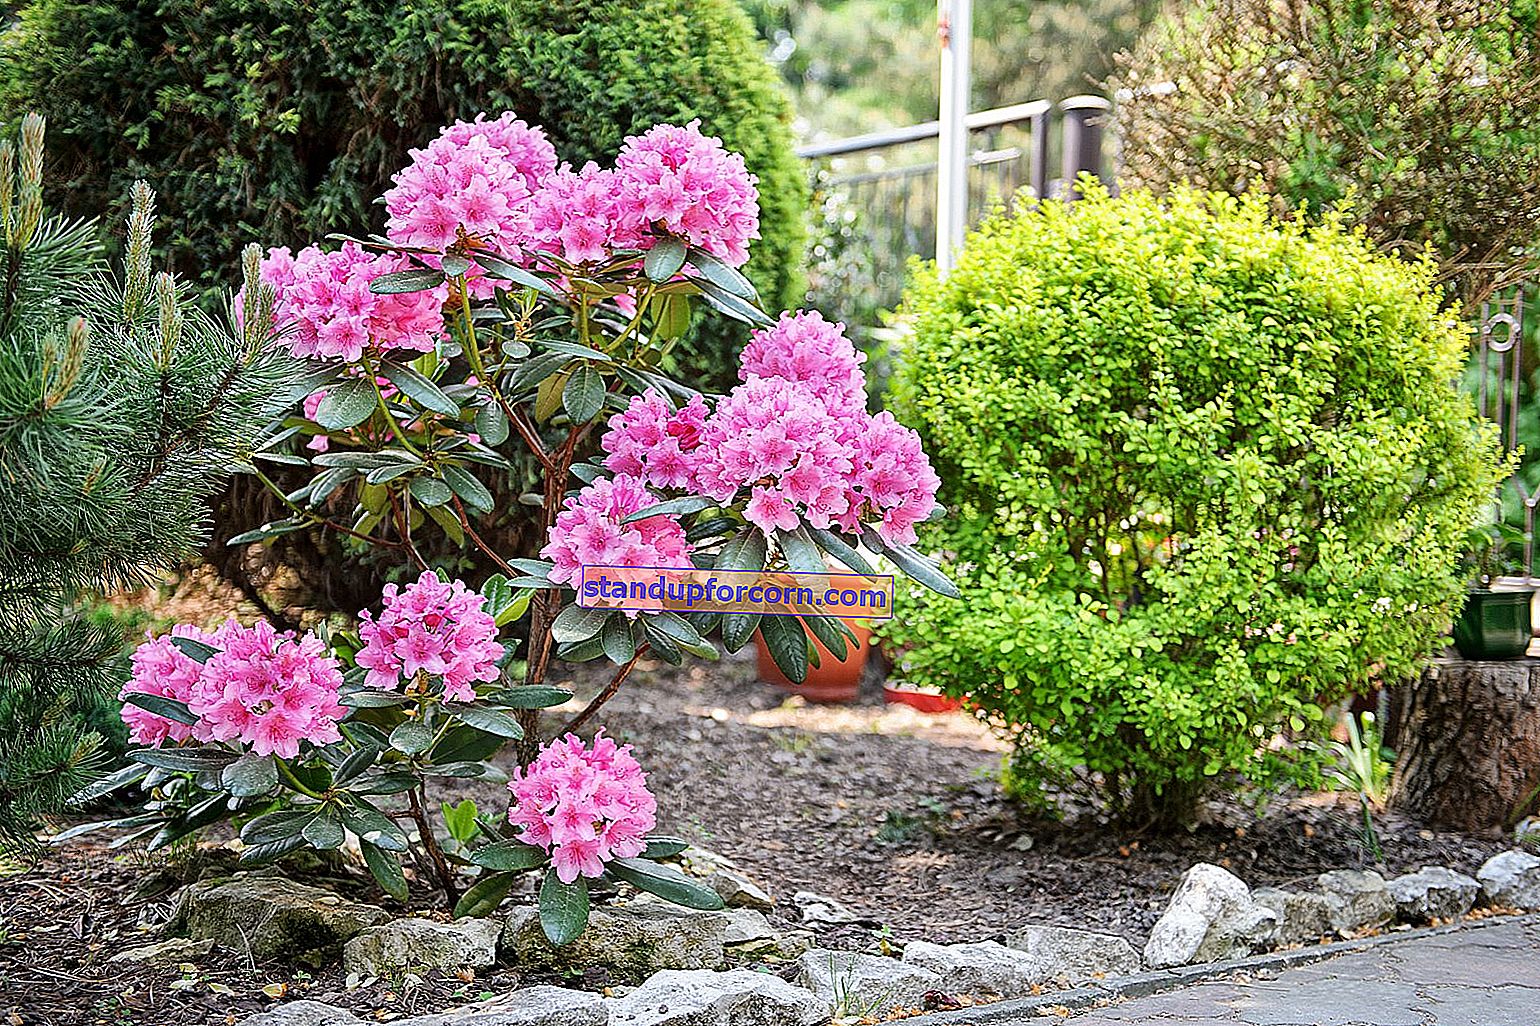 Rhododendron, rododendron - odling, vård, reproduktion